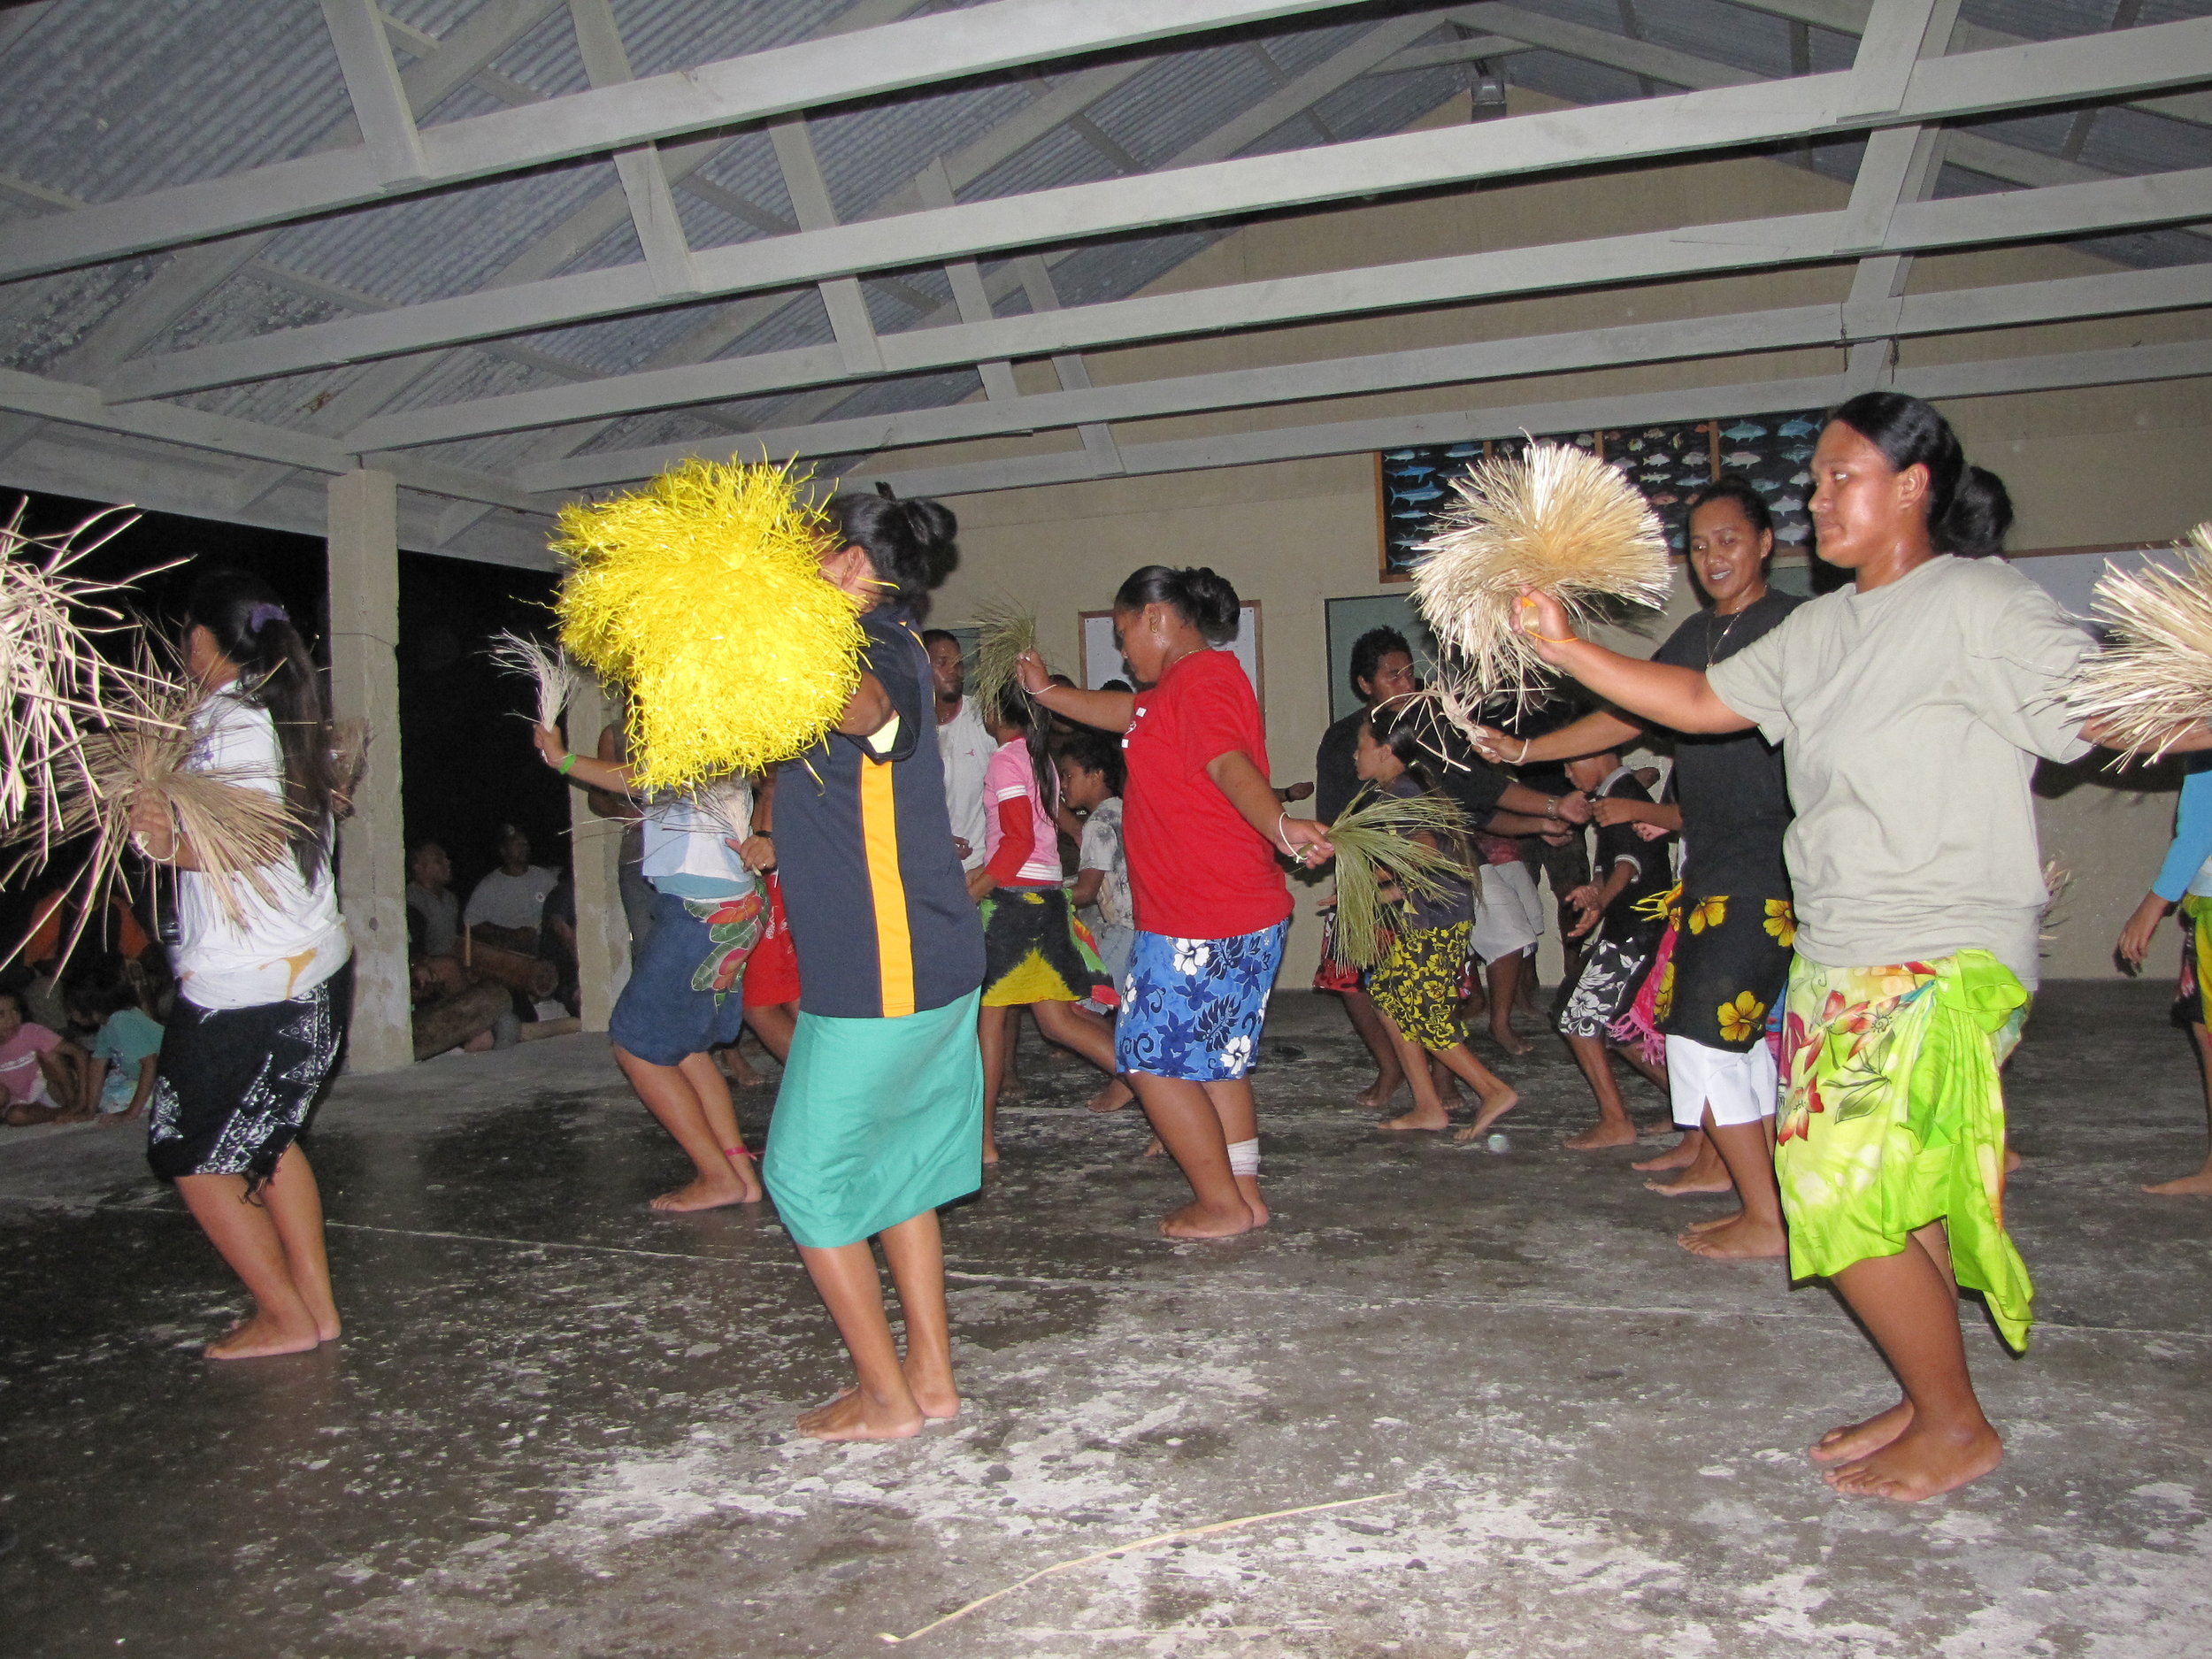 Dancing, an island tradition